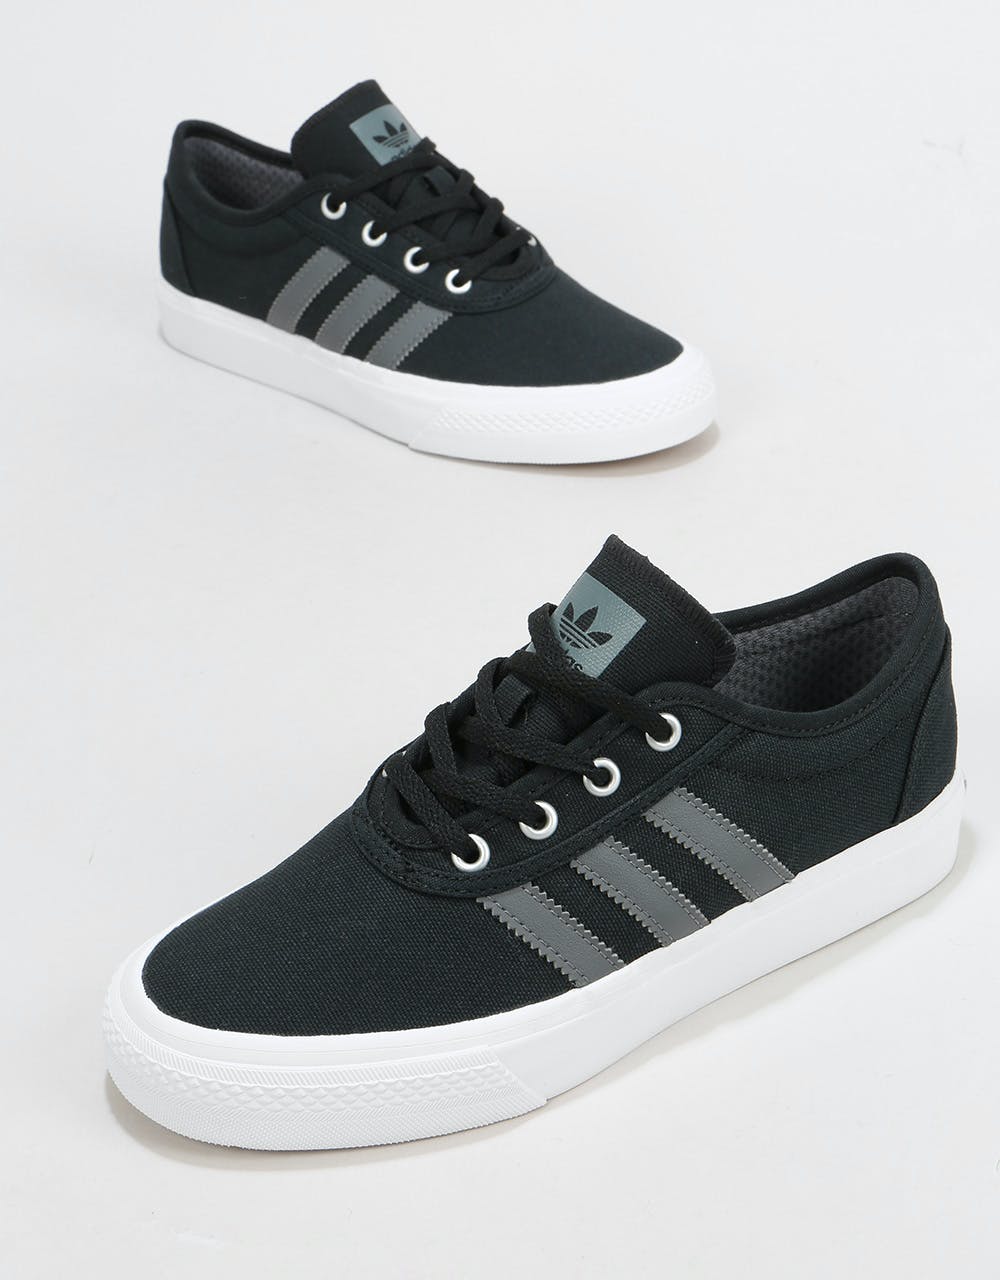 Adidas Adi-Ease Kids Skate Shoes - Black/Grey/White